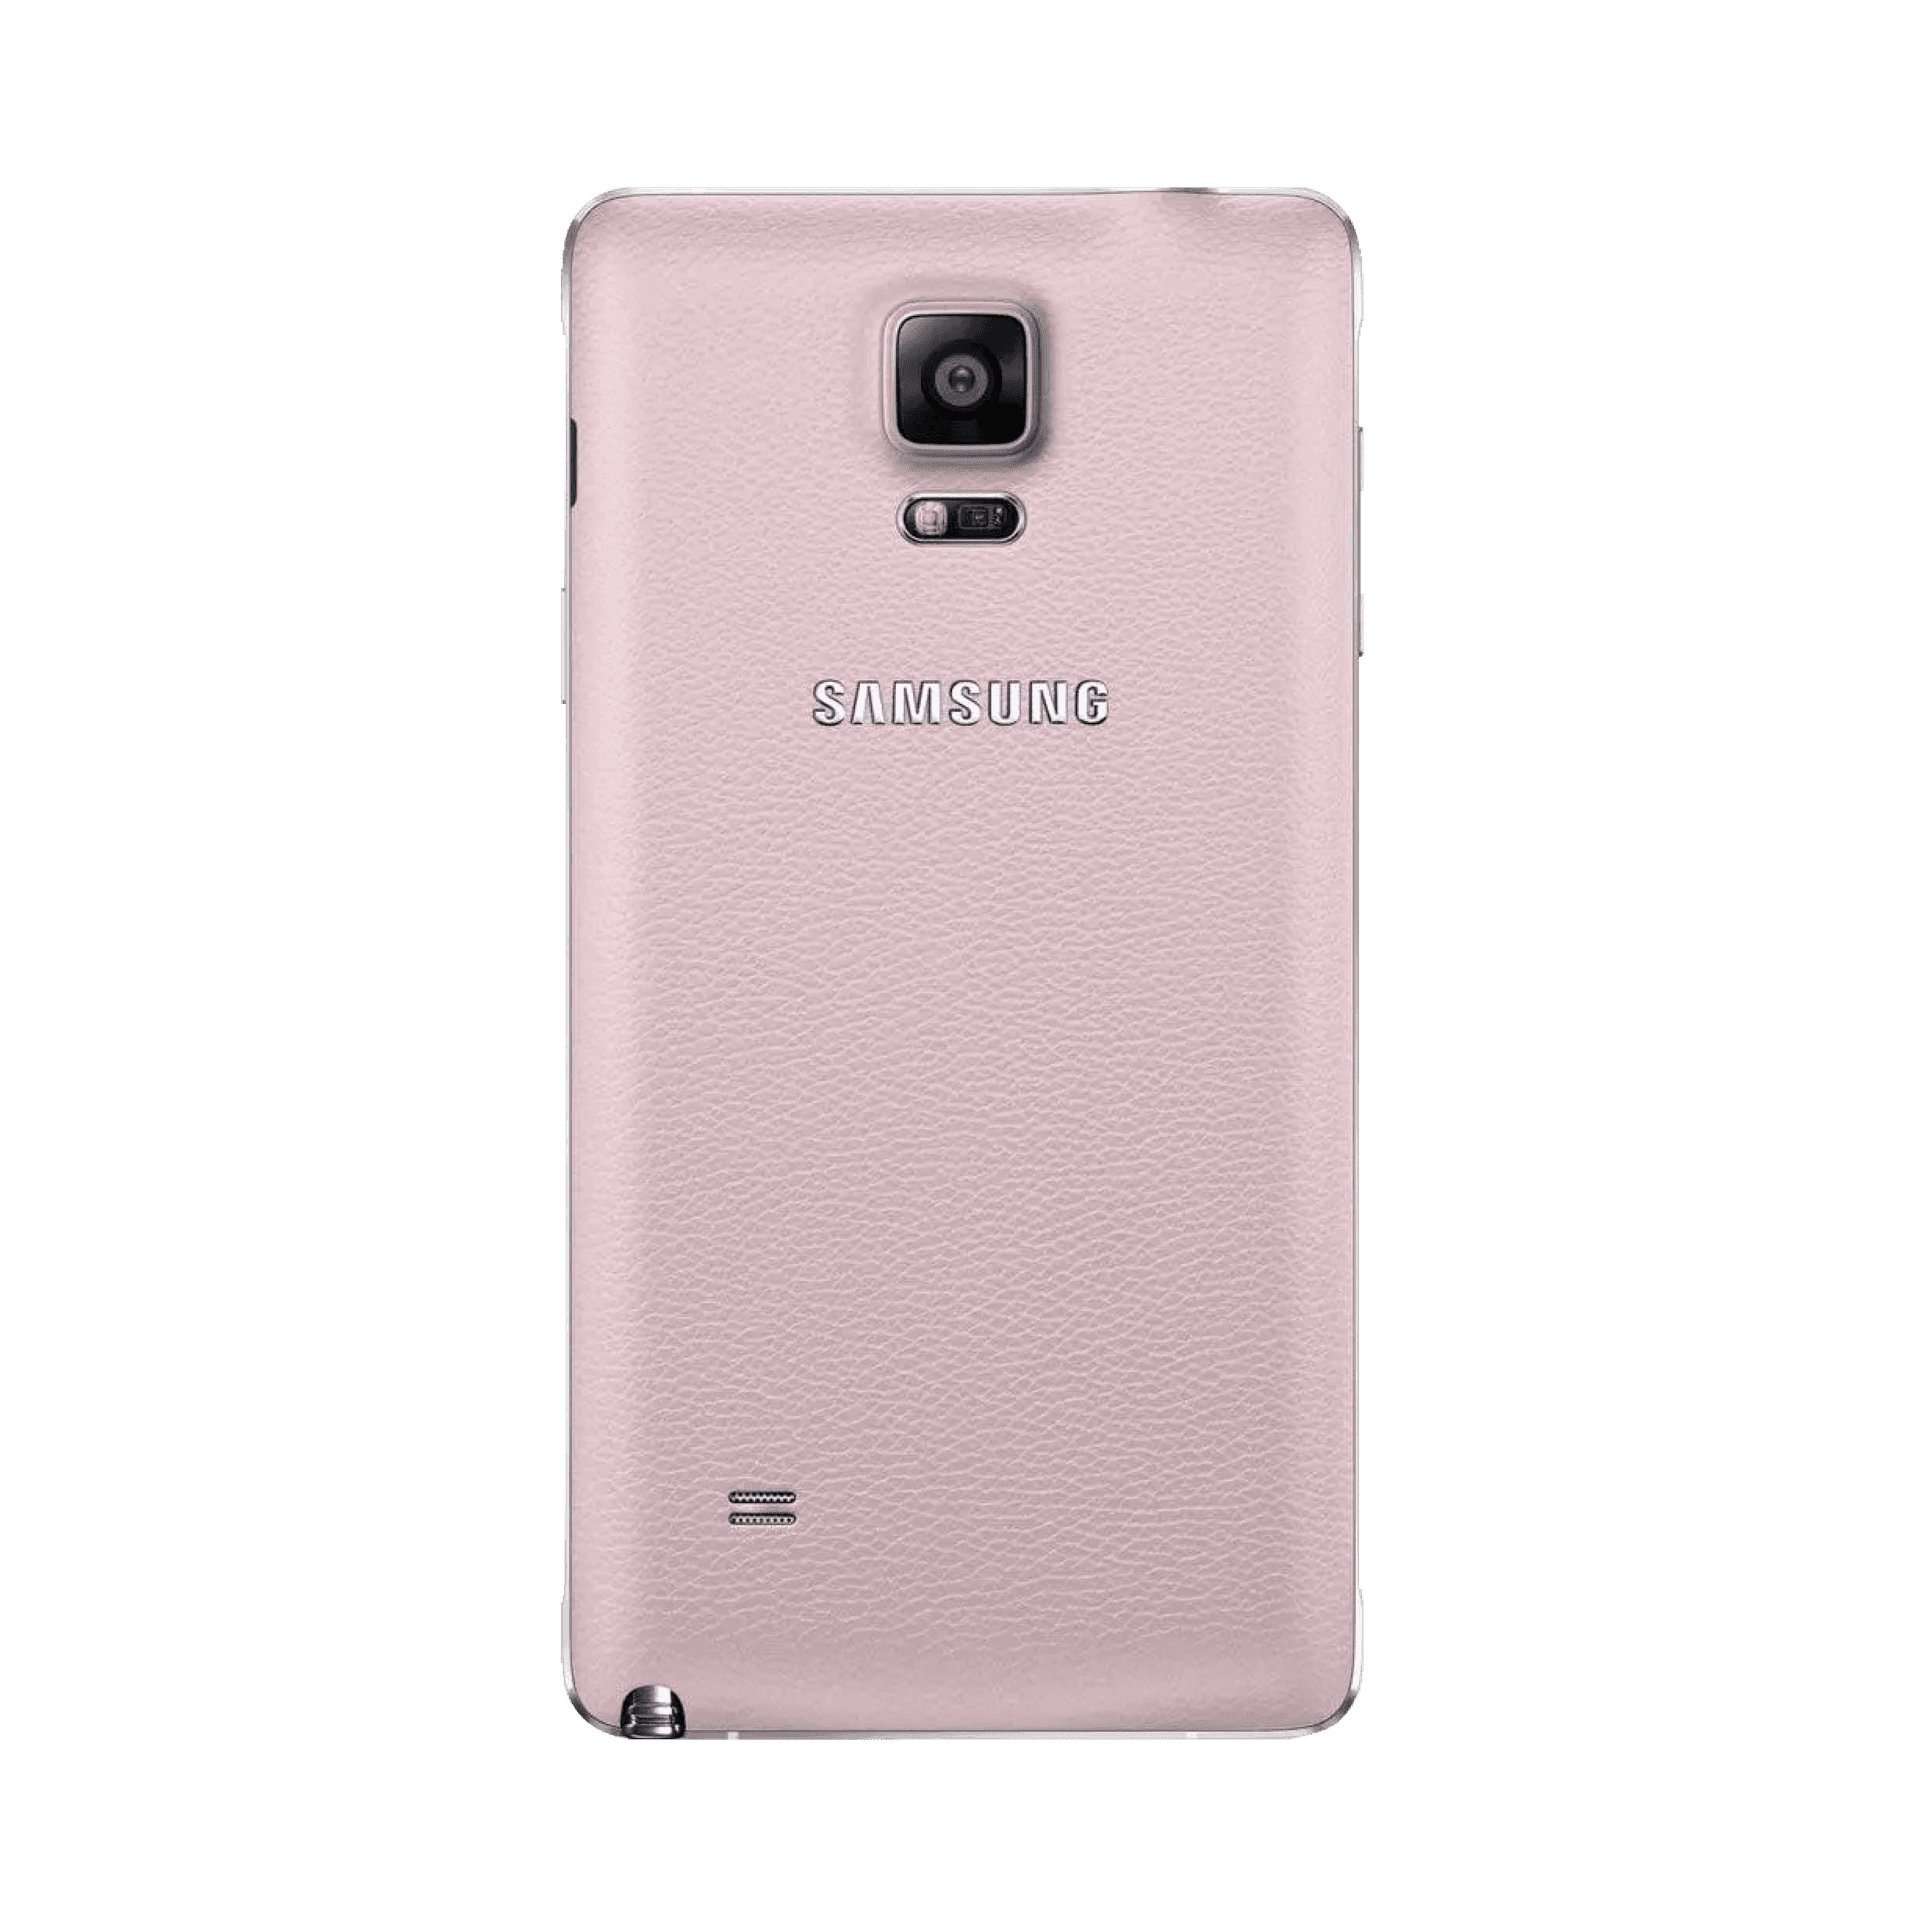 Samsung Galaxy Note 4 - 32 GB - Pembe